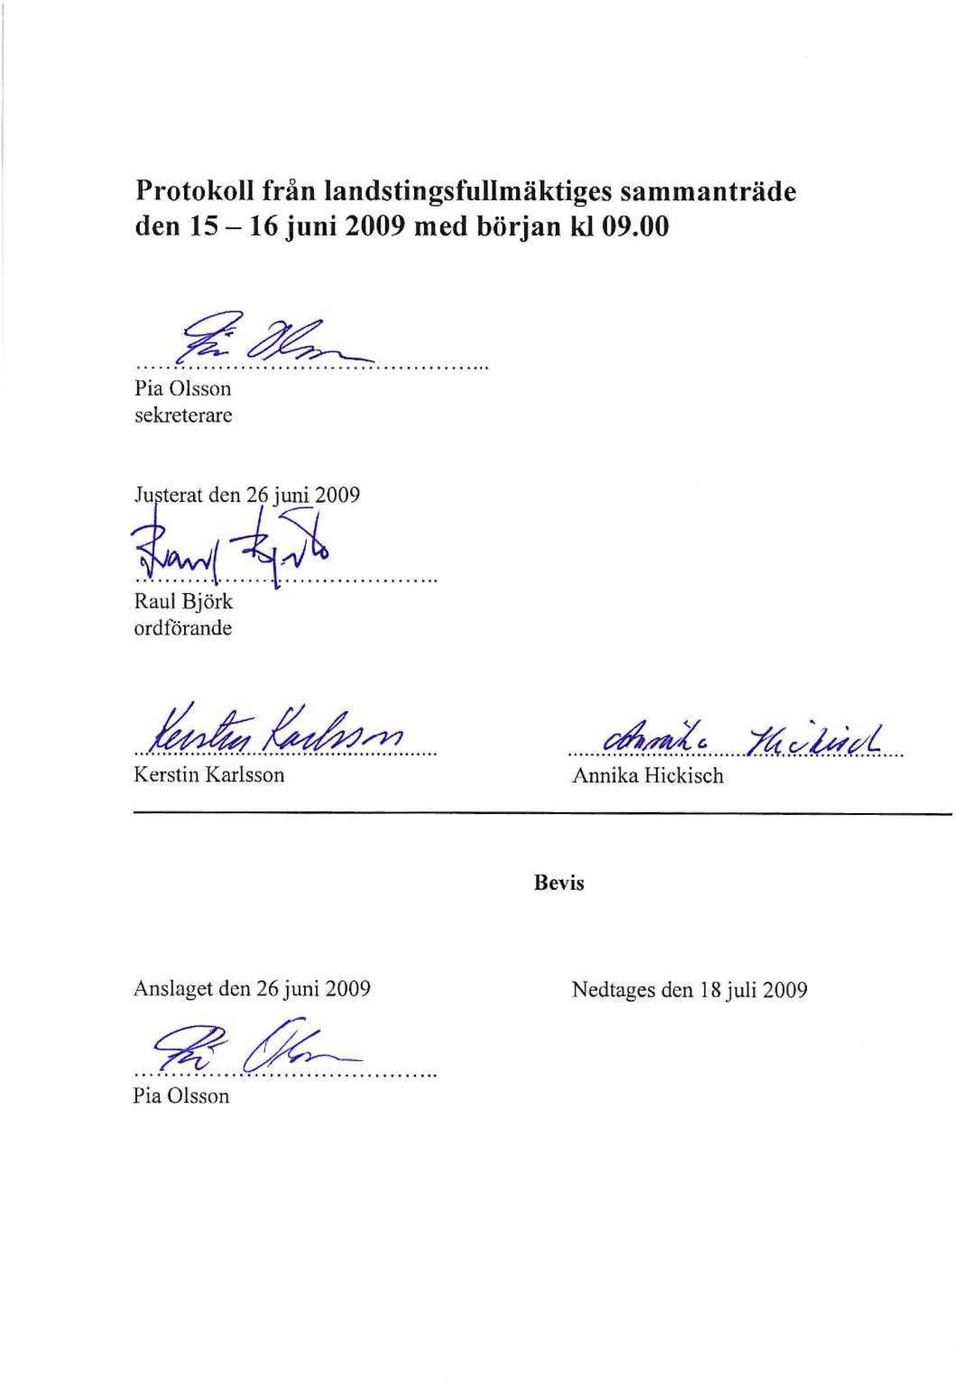 juni 2009 Raul Björk ordförande Kerstin Karlsson :-^L.